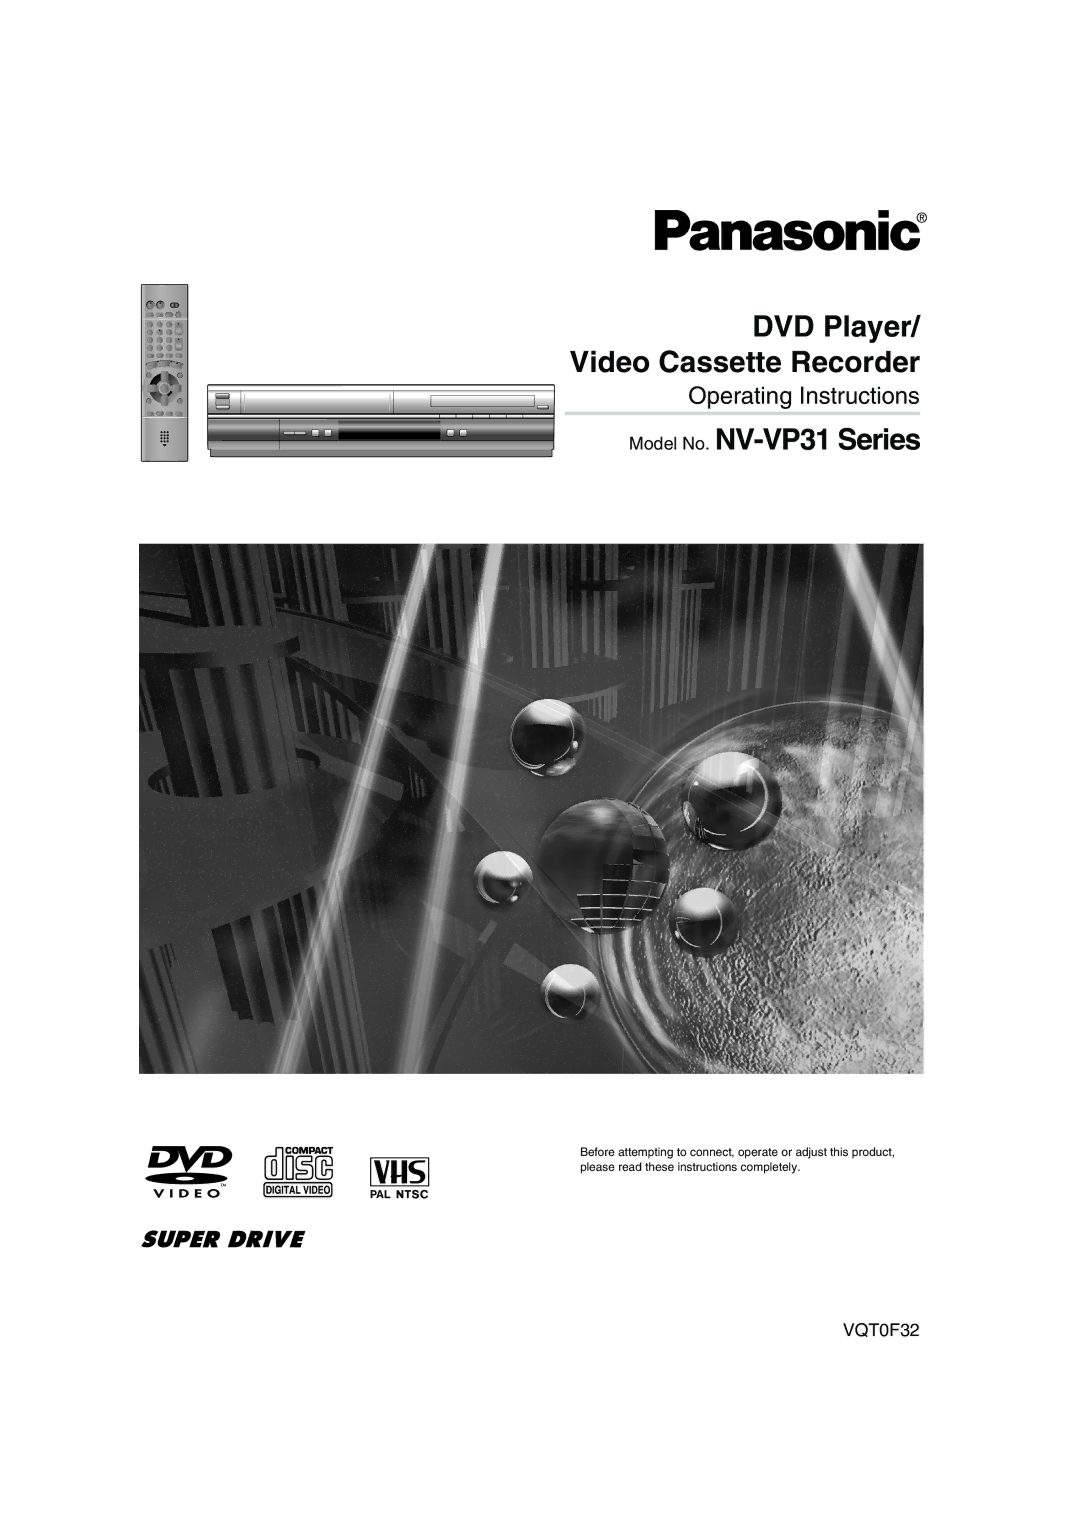 Panasonic VP-31GN manual DVD Player Video Cassette Recorder 